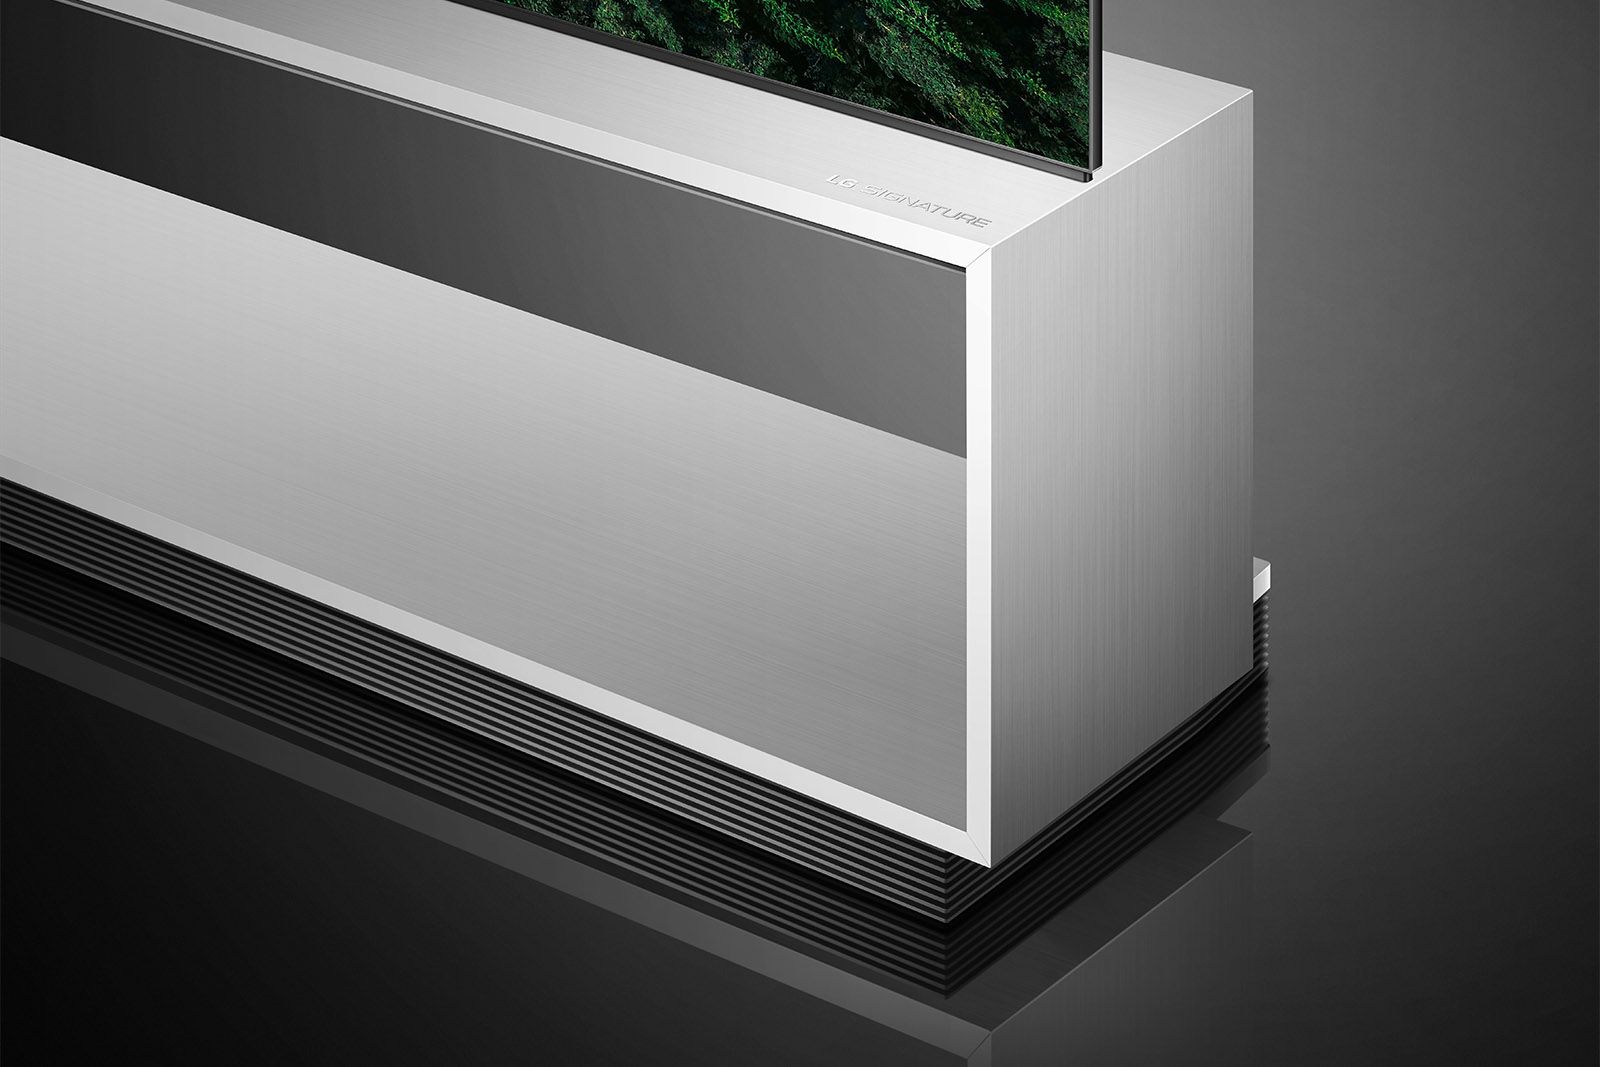 LG Z9 8K OLED TV review image 6